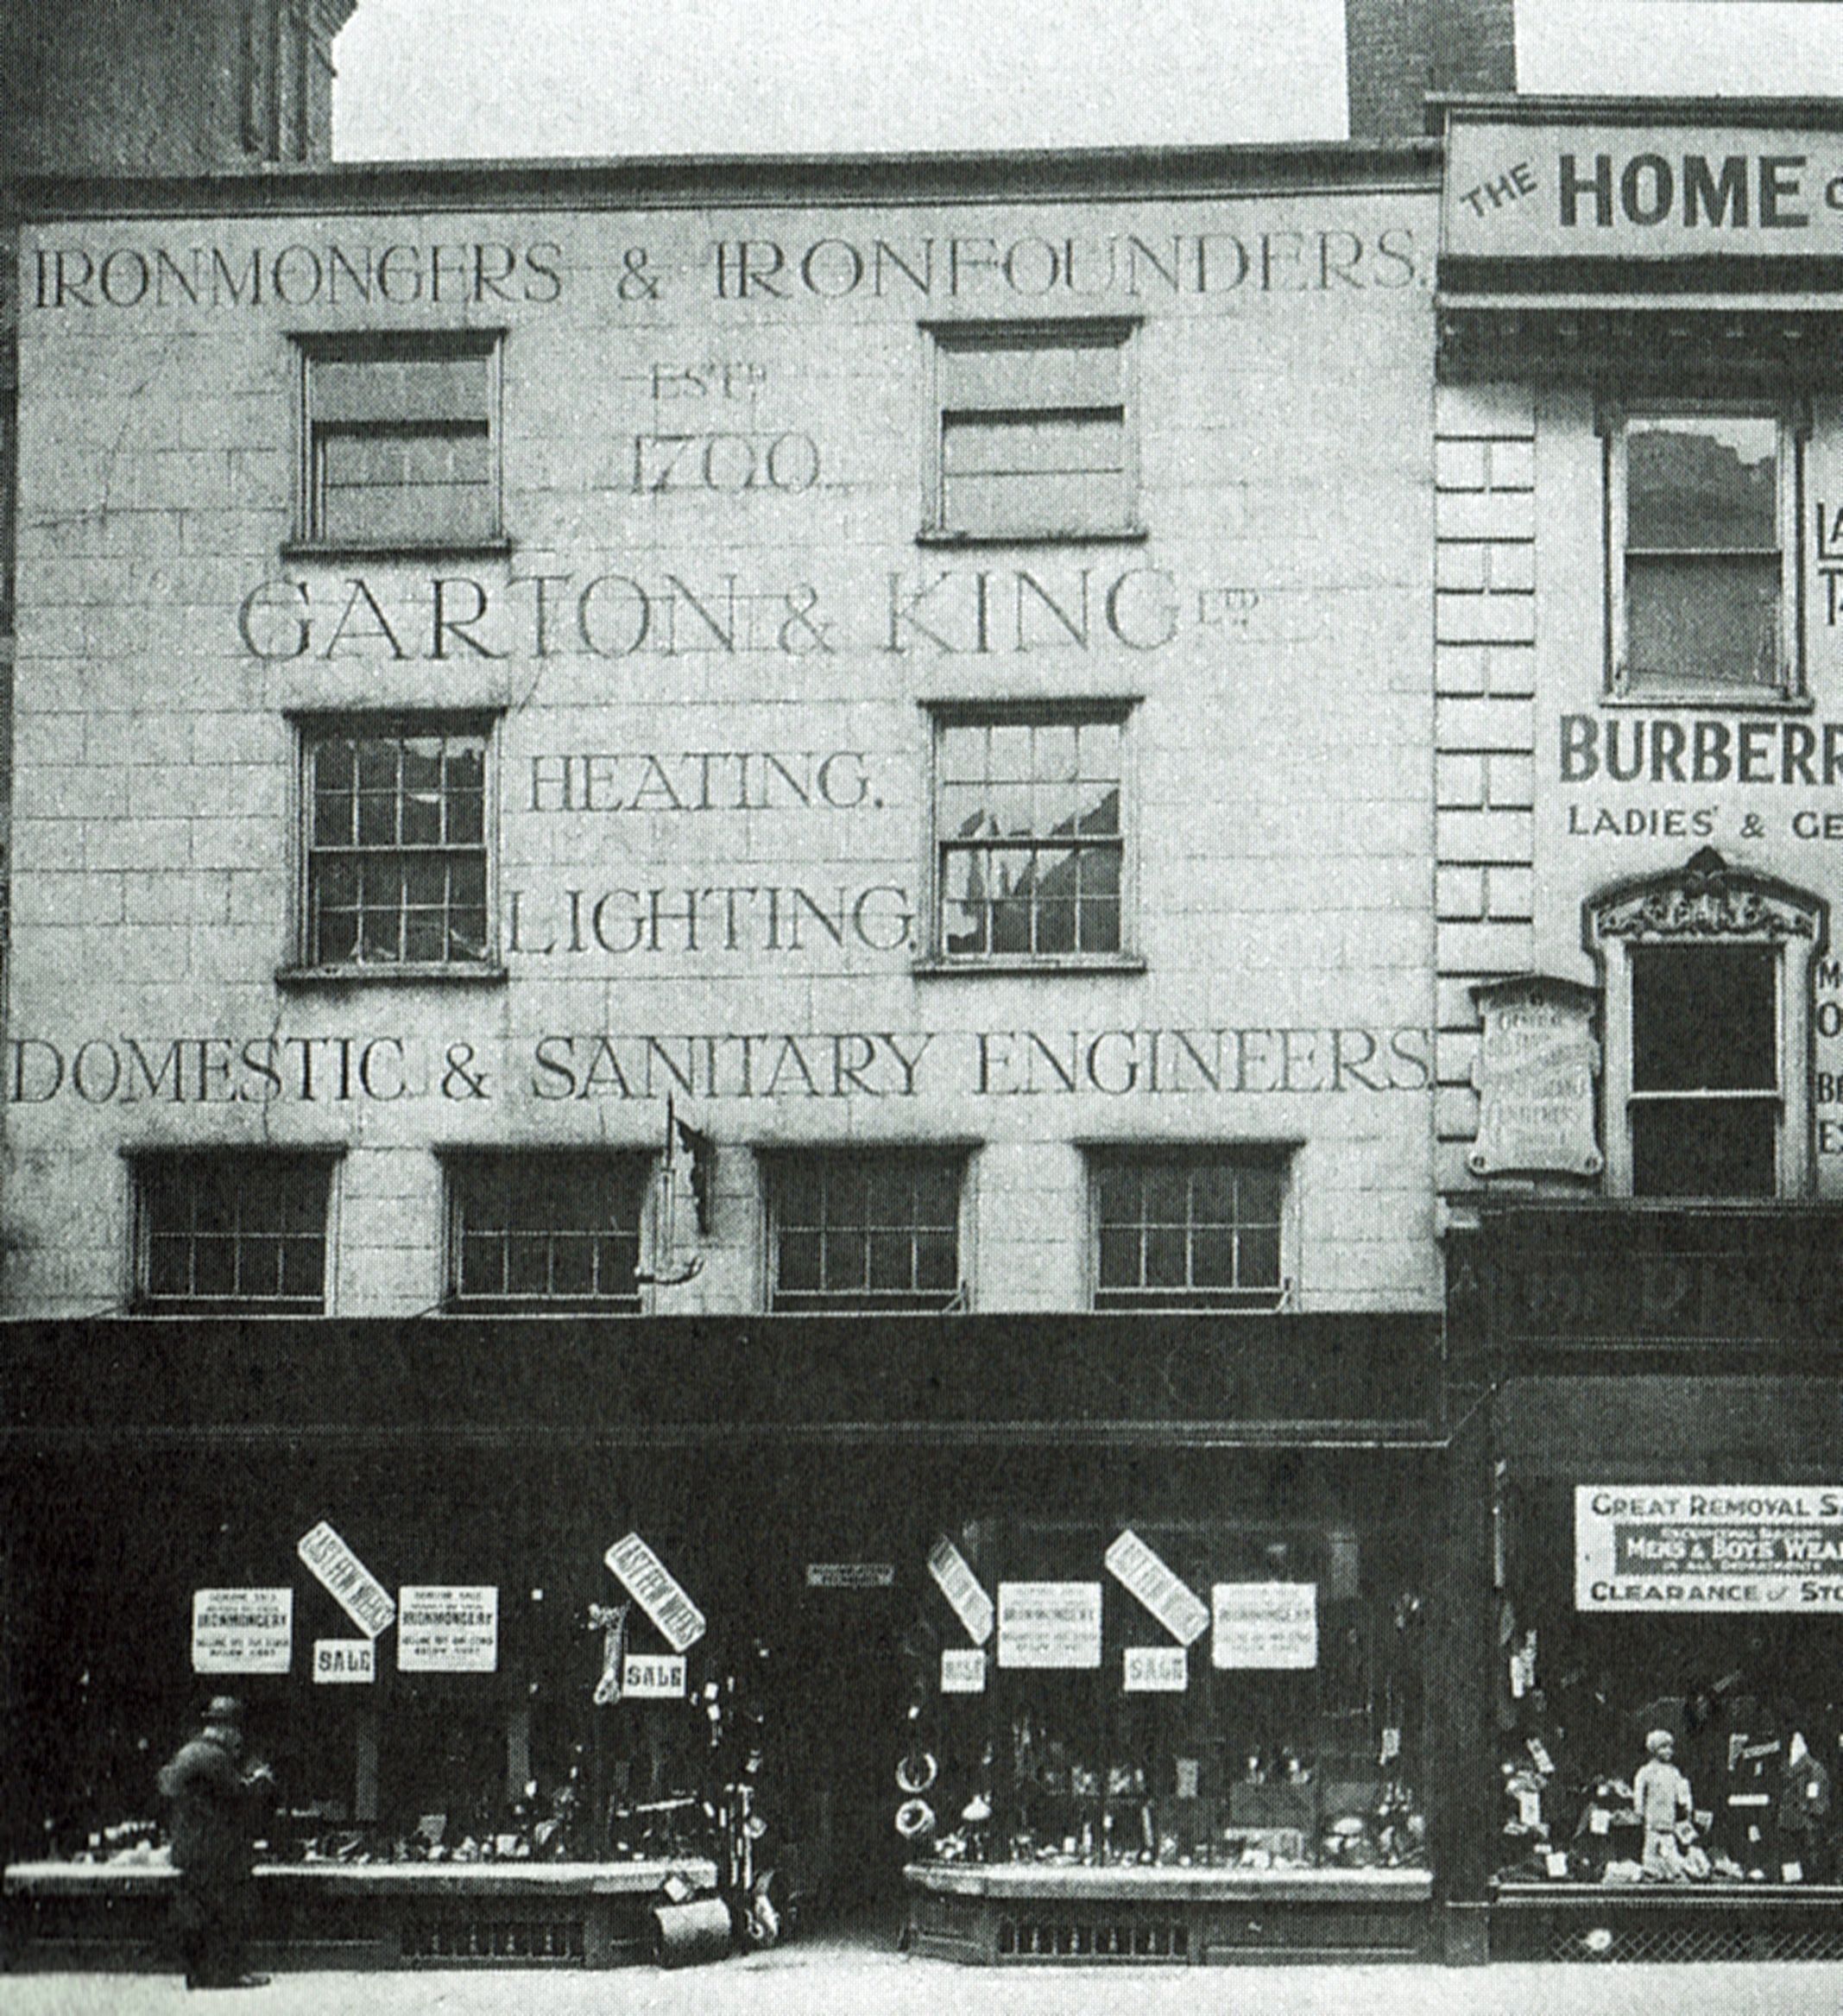 Sale of Ironmongery at 190 High Street